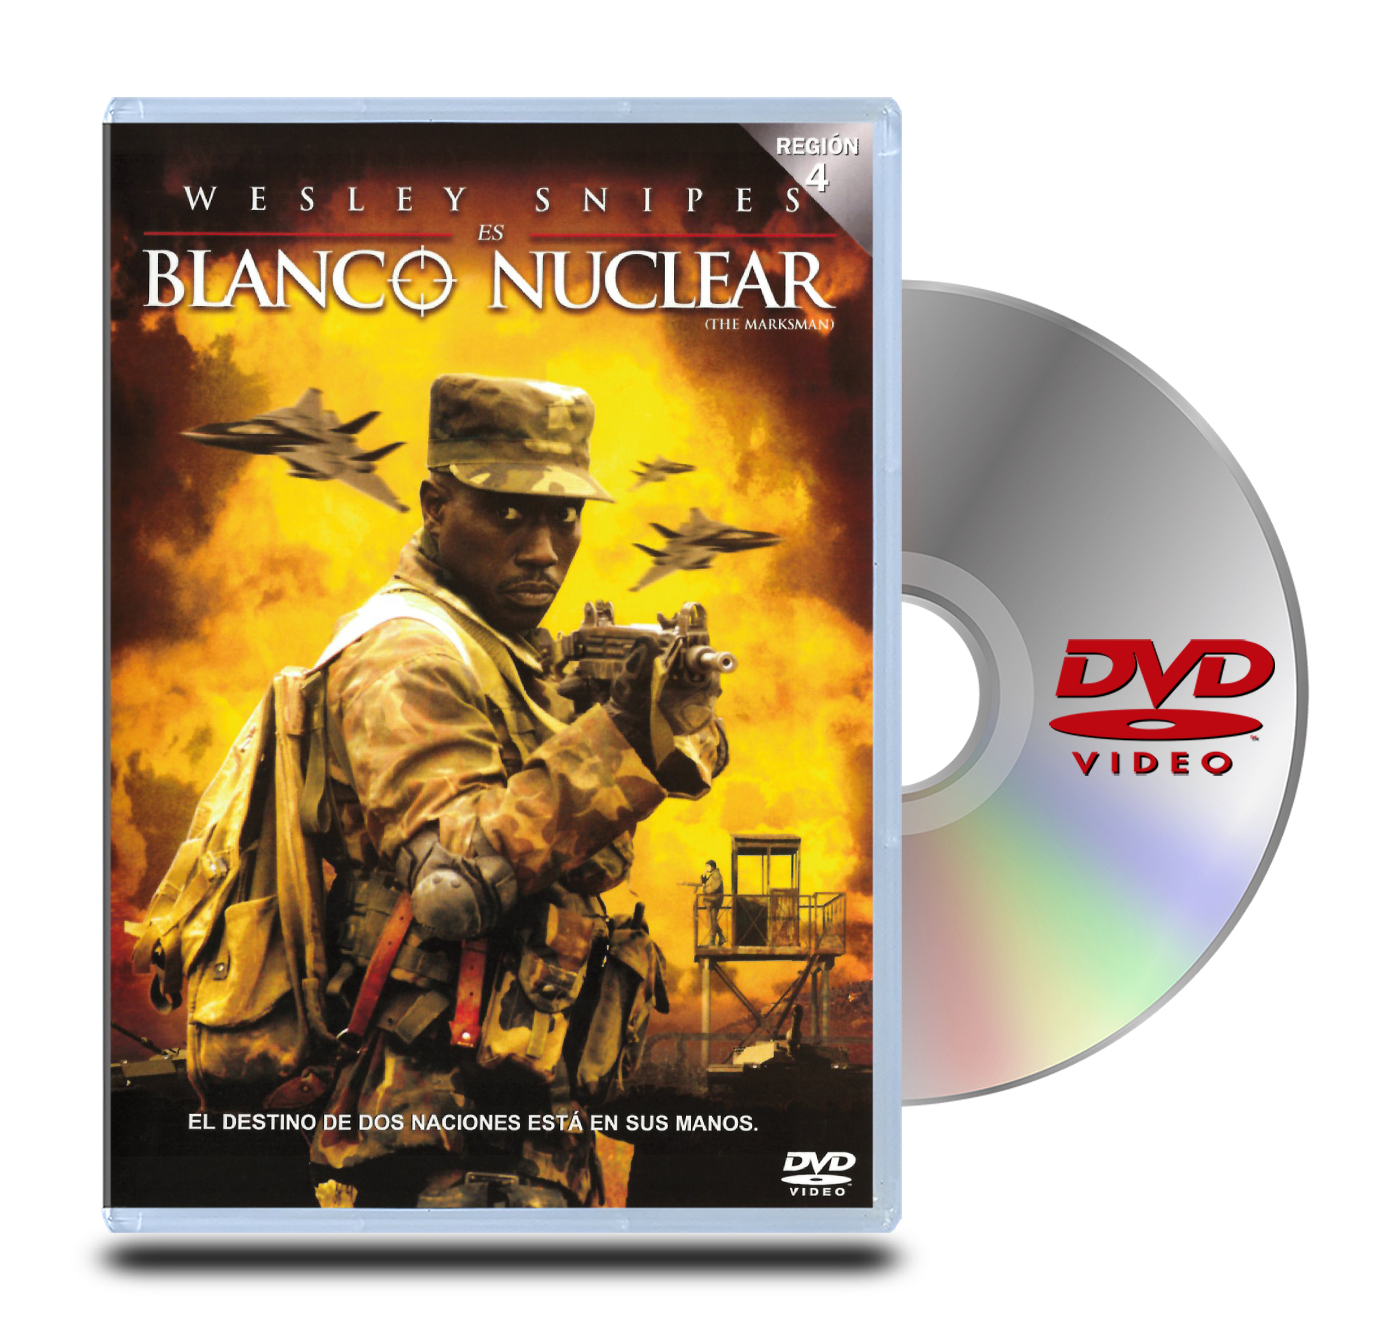 DVD BLANCO NUCLEAR